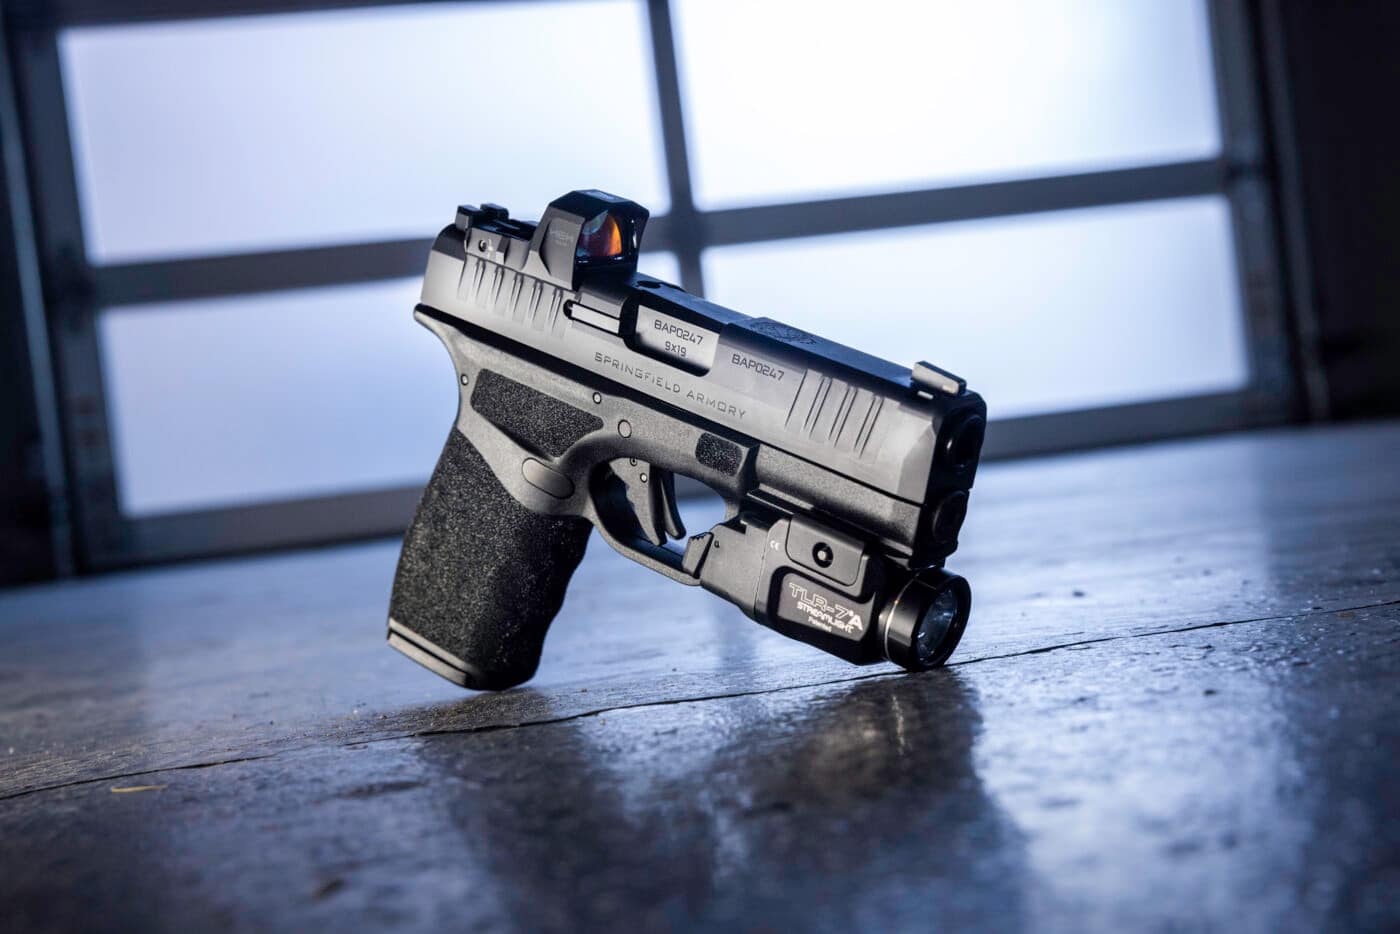 Springfield Armory Hellcat Pro pistol with Streamlight weaponlight